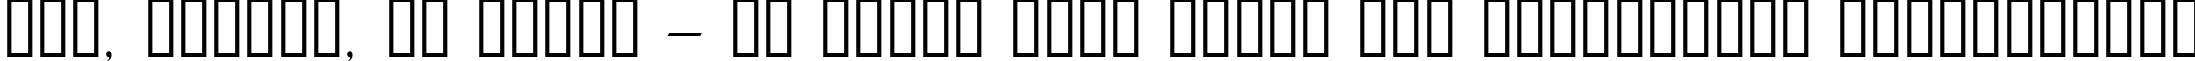 Пример написания шрифтом Ambrosia текста на украинском